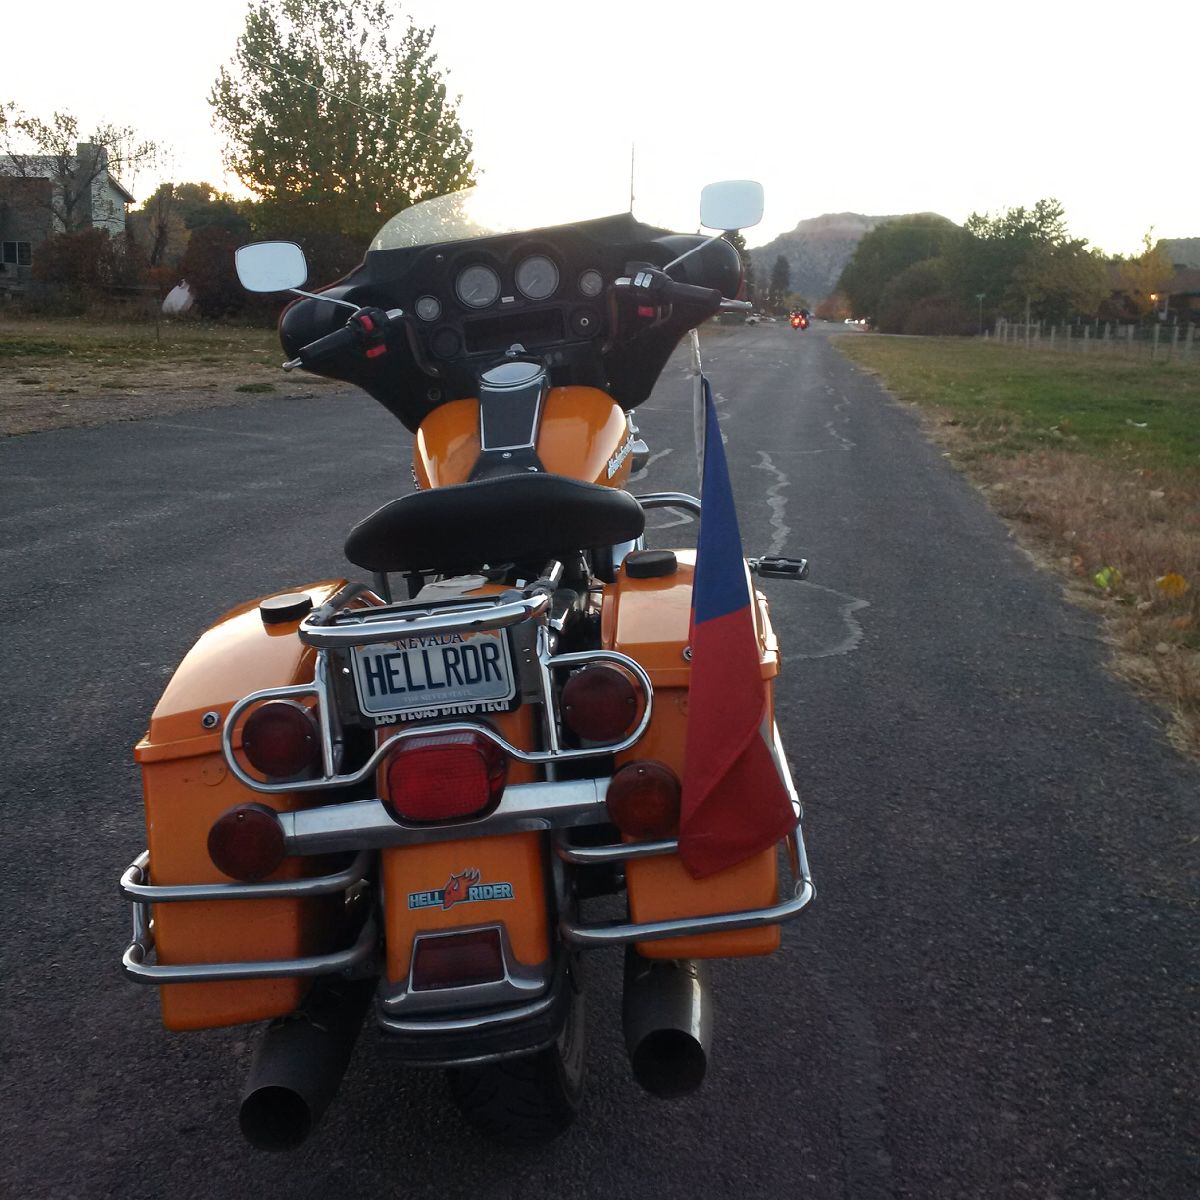 Harley-Davidson policejní verze Hellrider